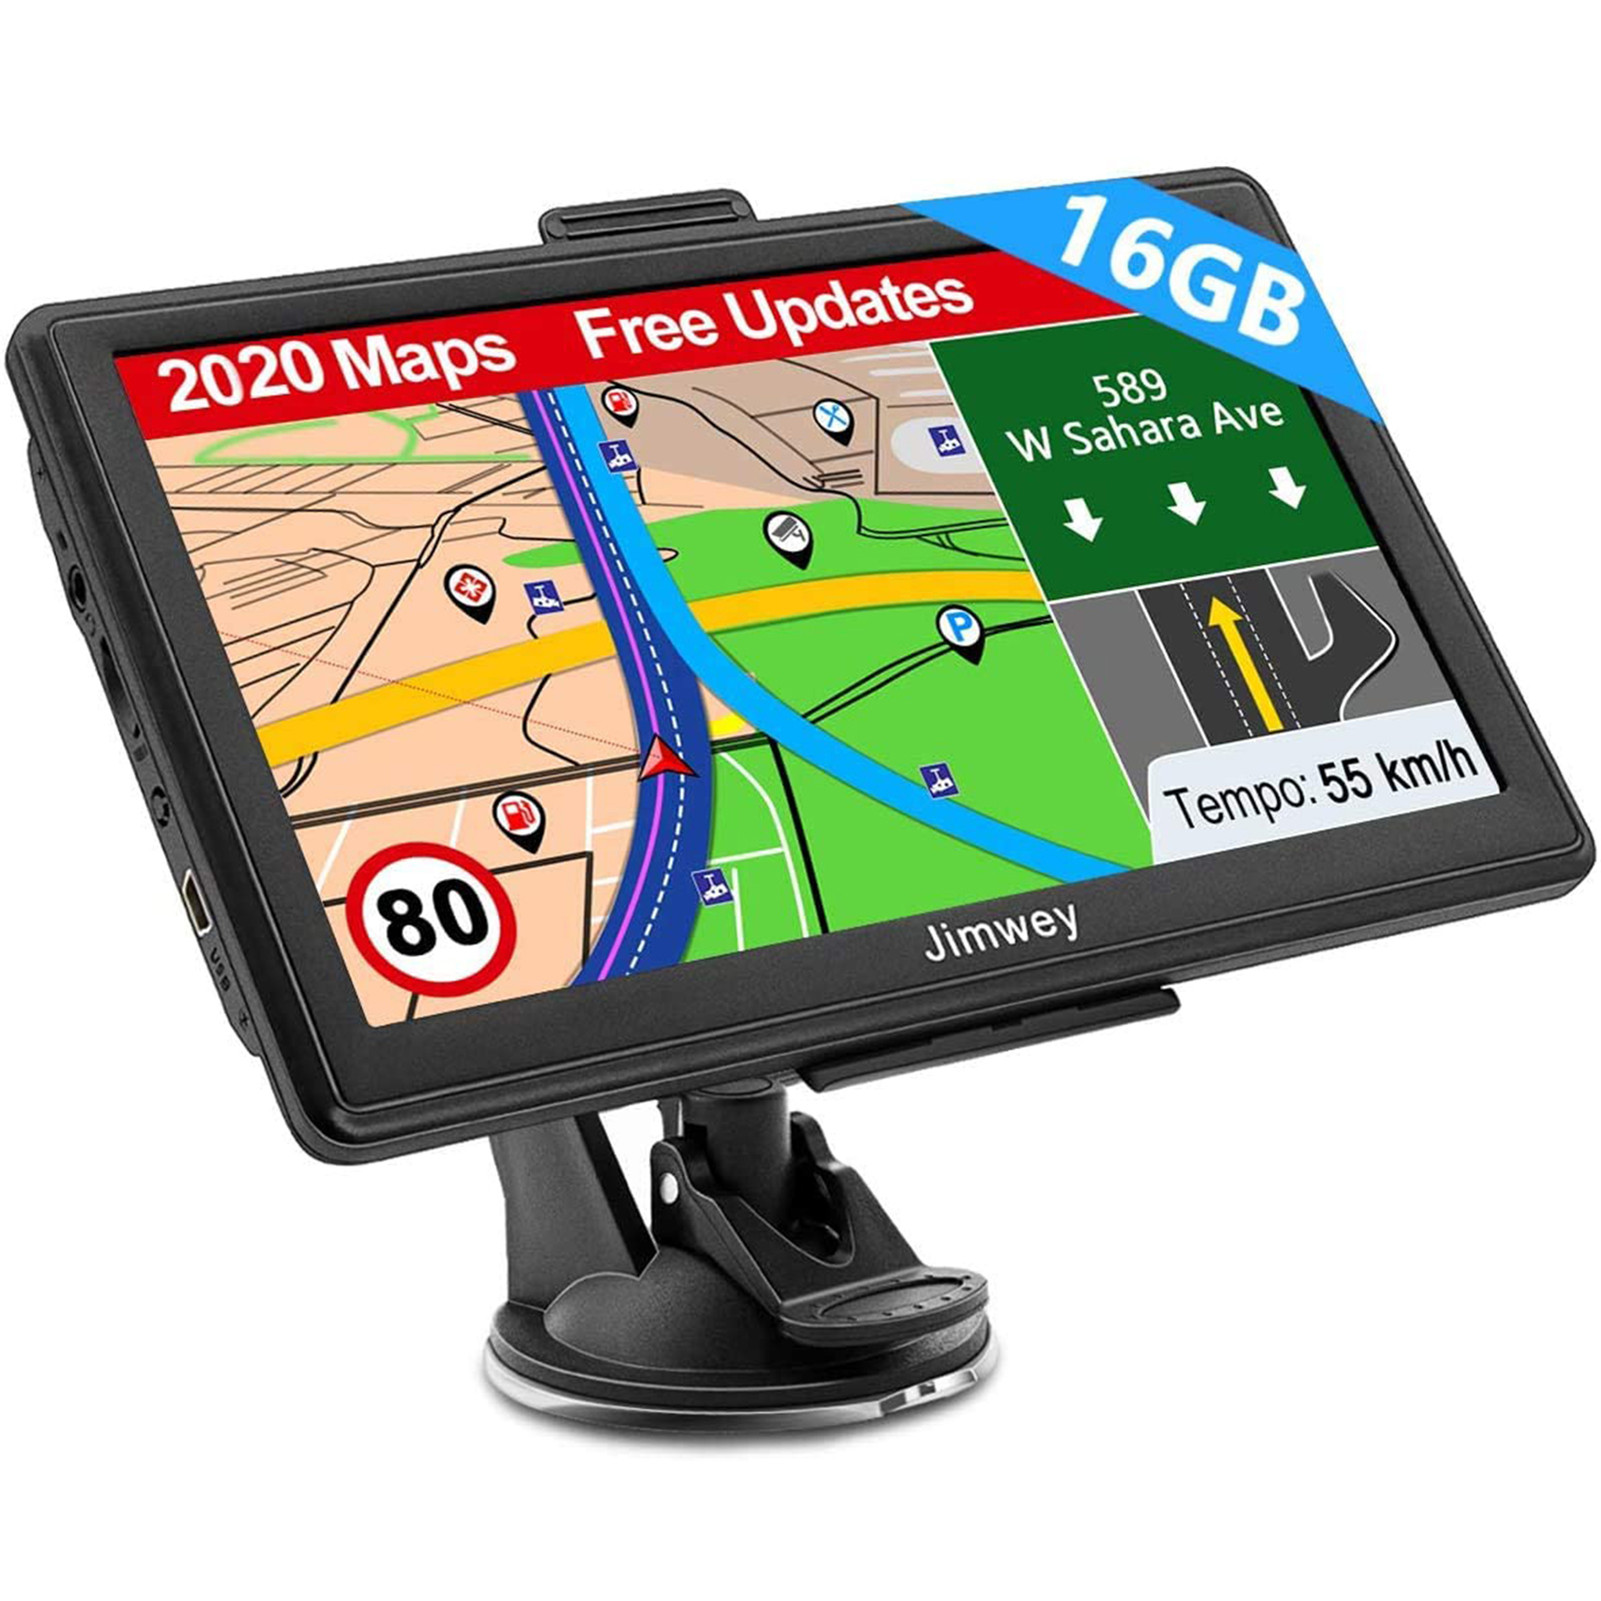 7inch GPS Navigation with Bluetooth (Jimwey)